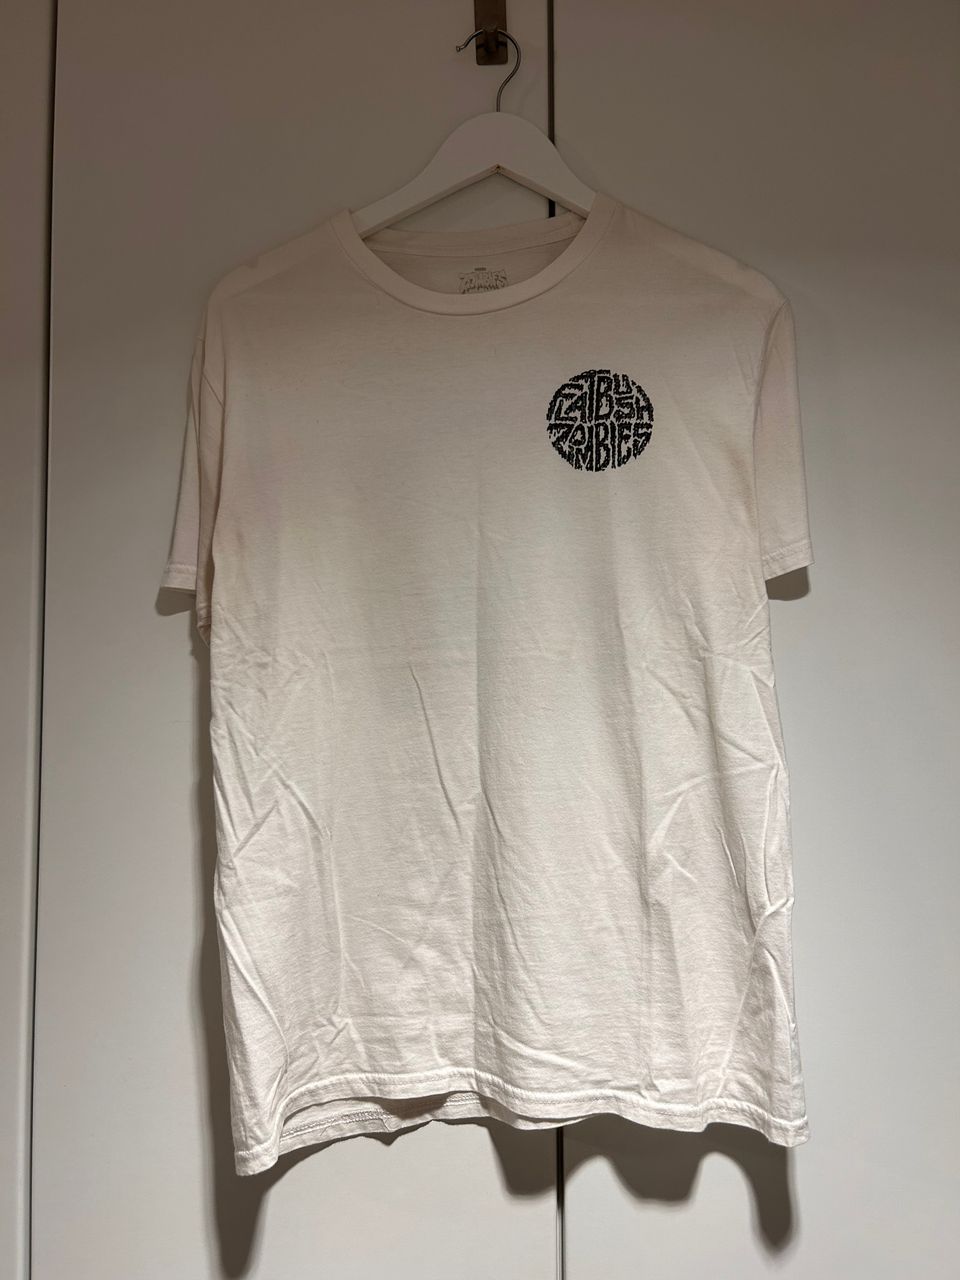 Flatbush Zombies Spring Tour ‘17 T-Shirt